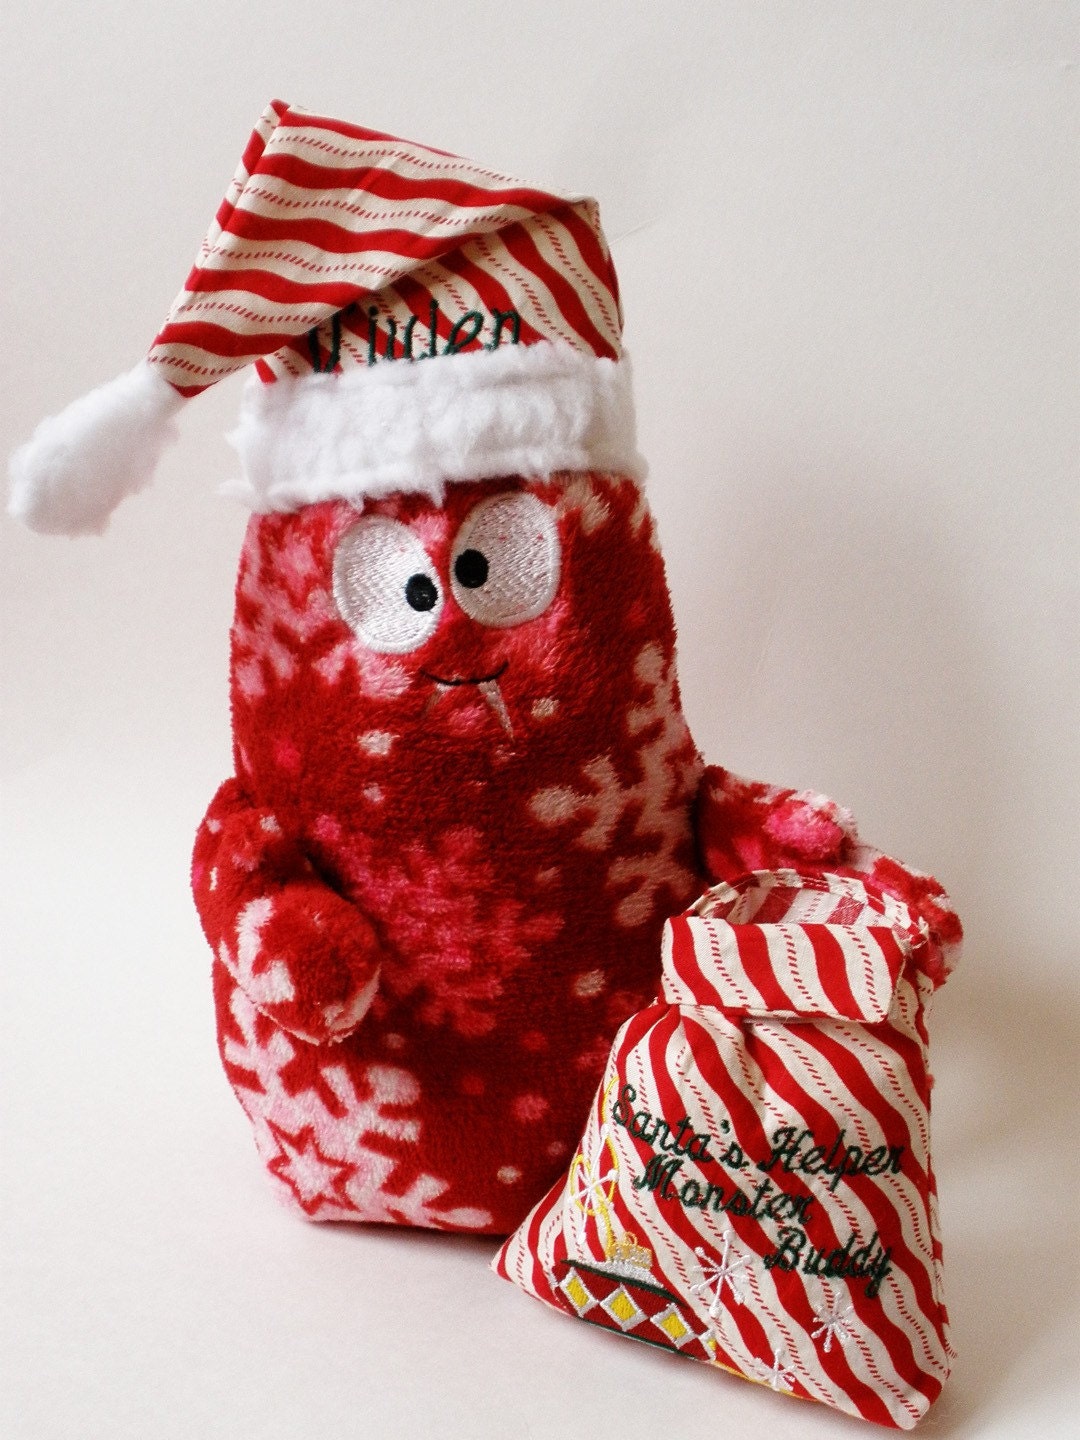 Santa's Helper Monster Buddy Stuffed Toy - Free Customization - Red and White